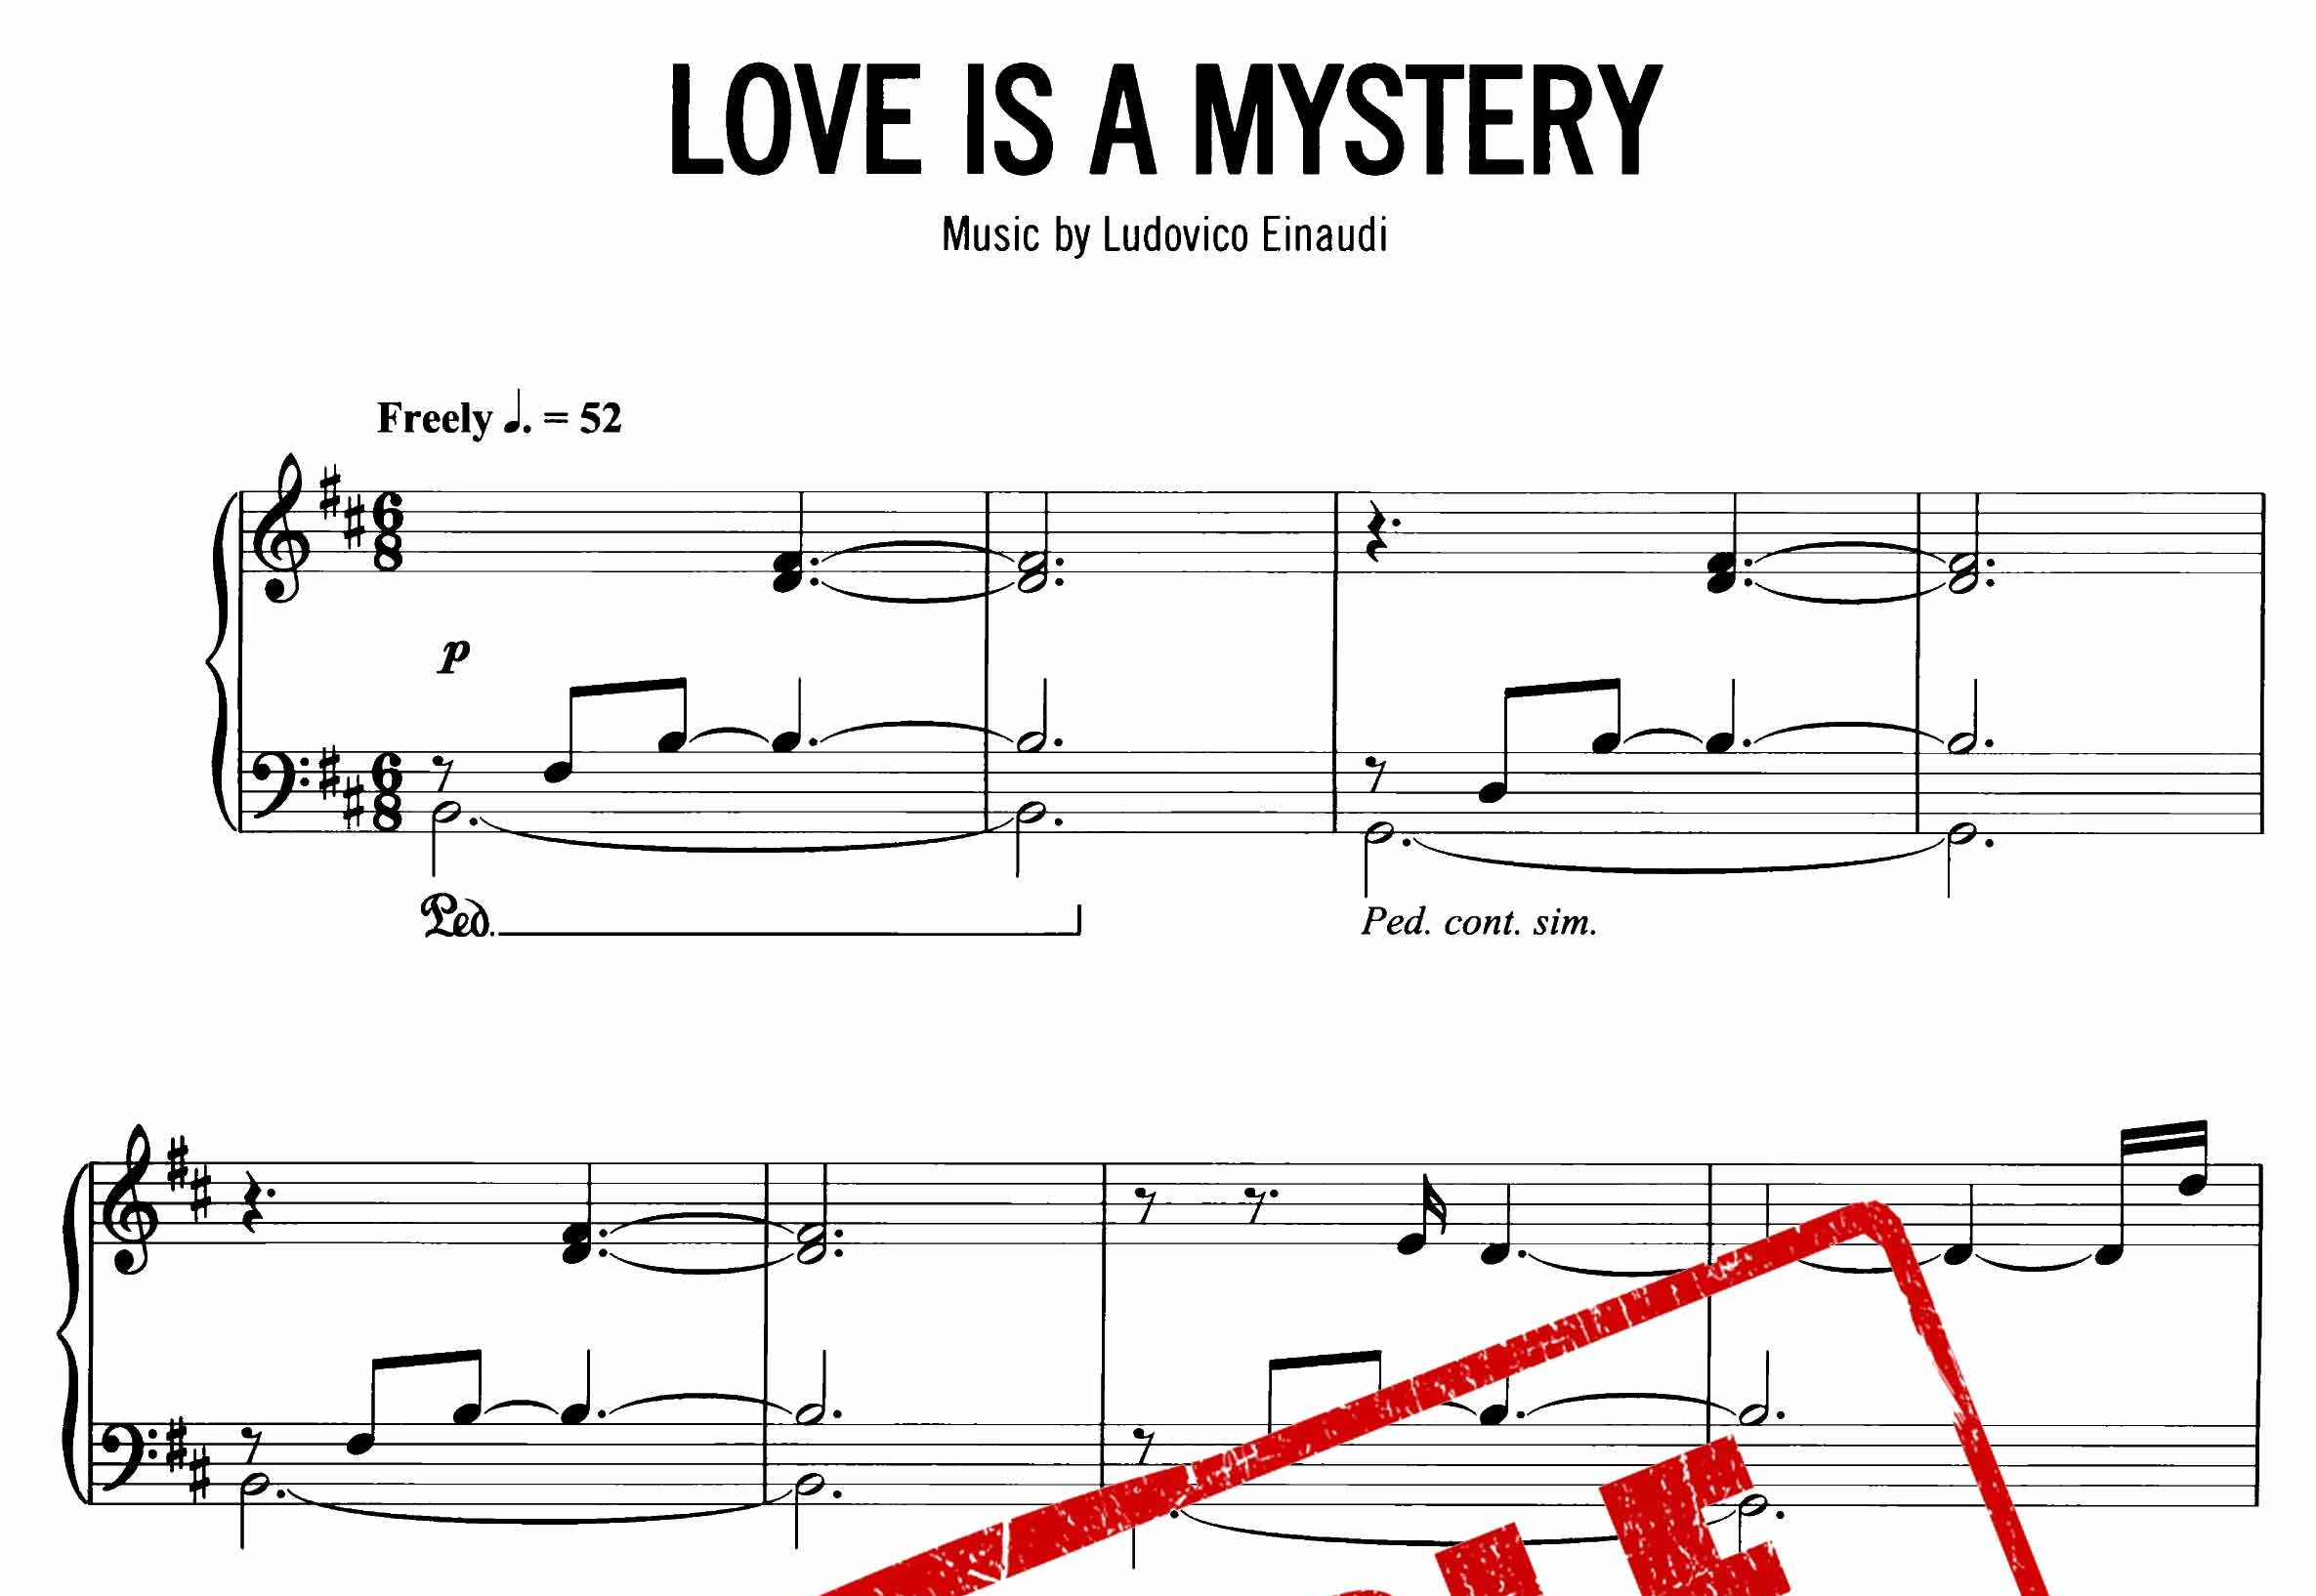 نت پیانوی Love is a mystery از لودویکو اناودی